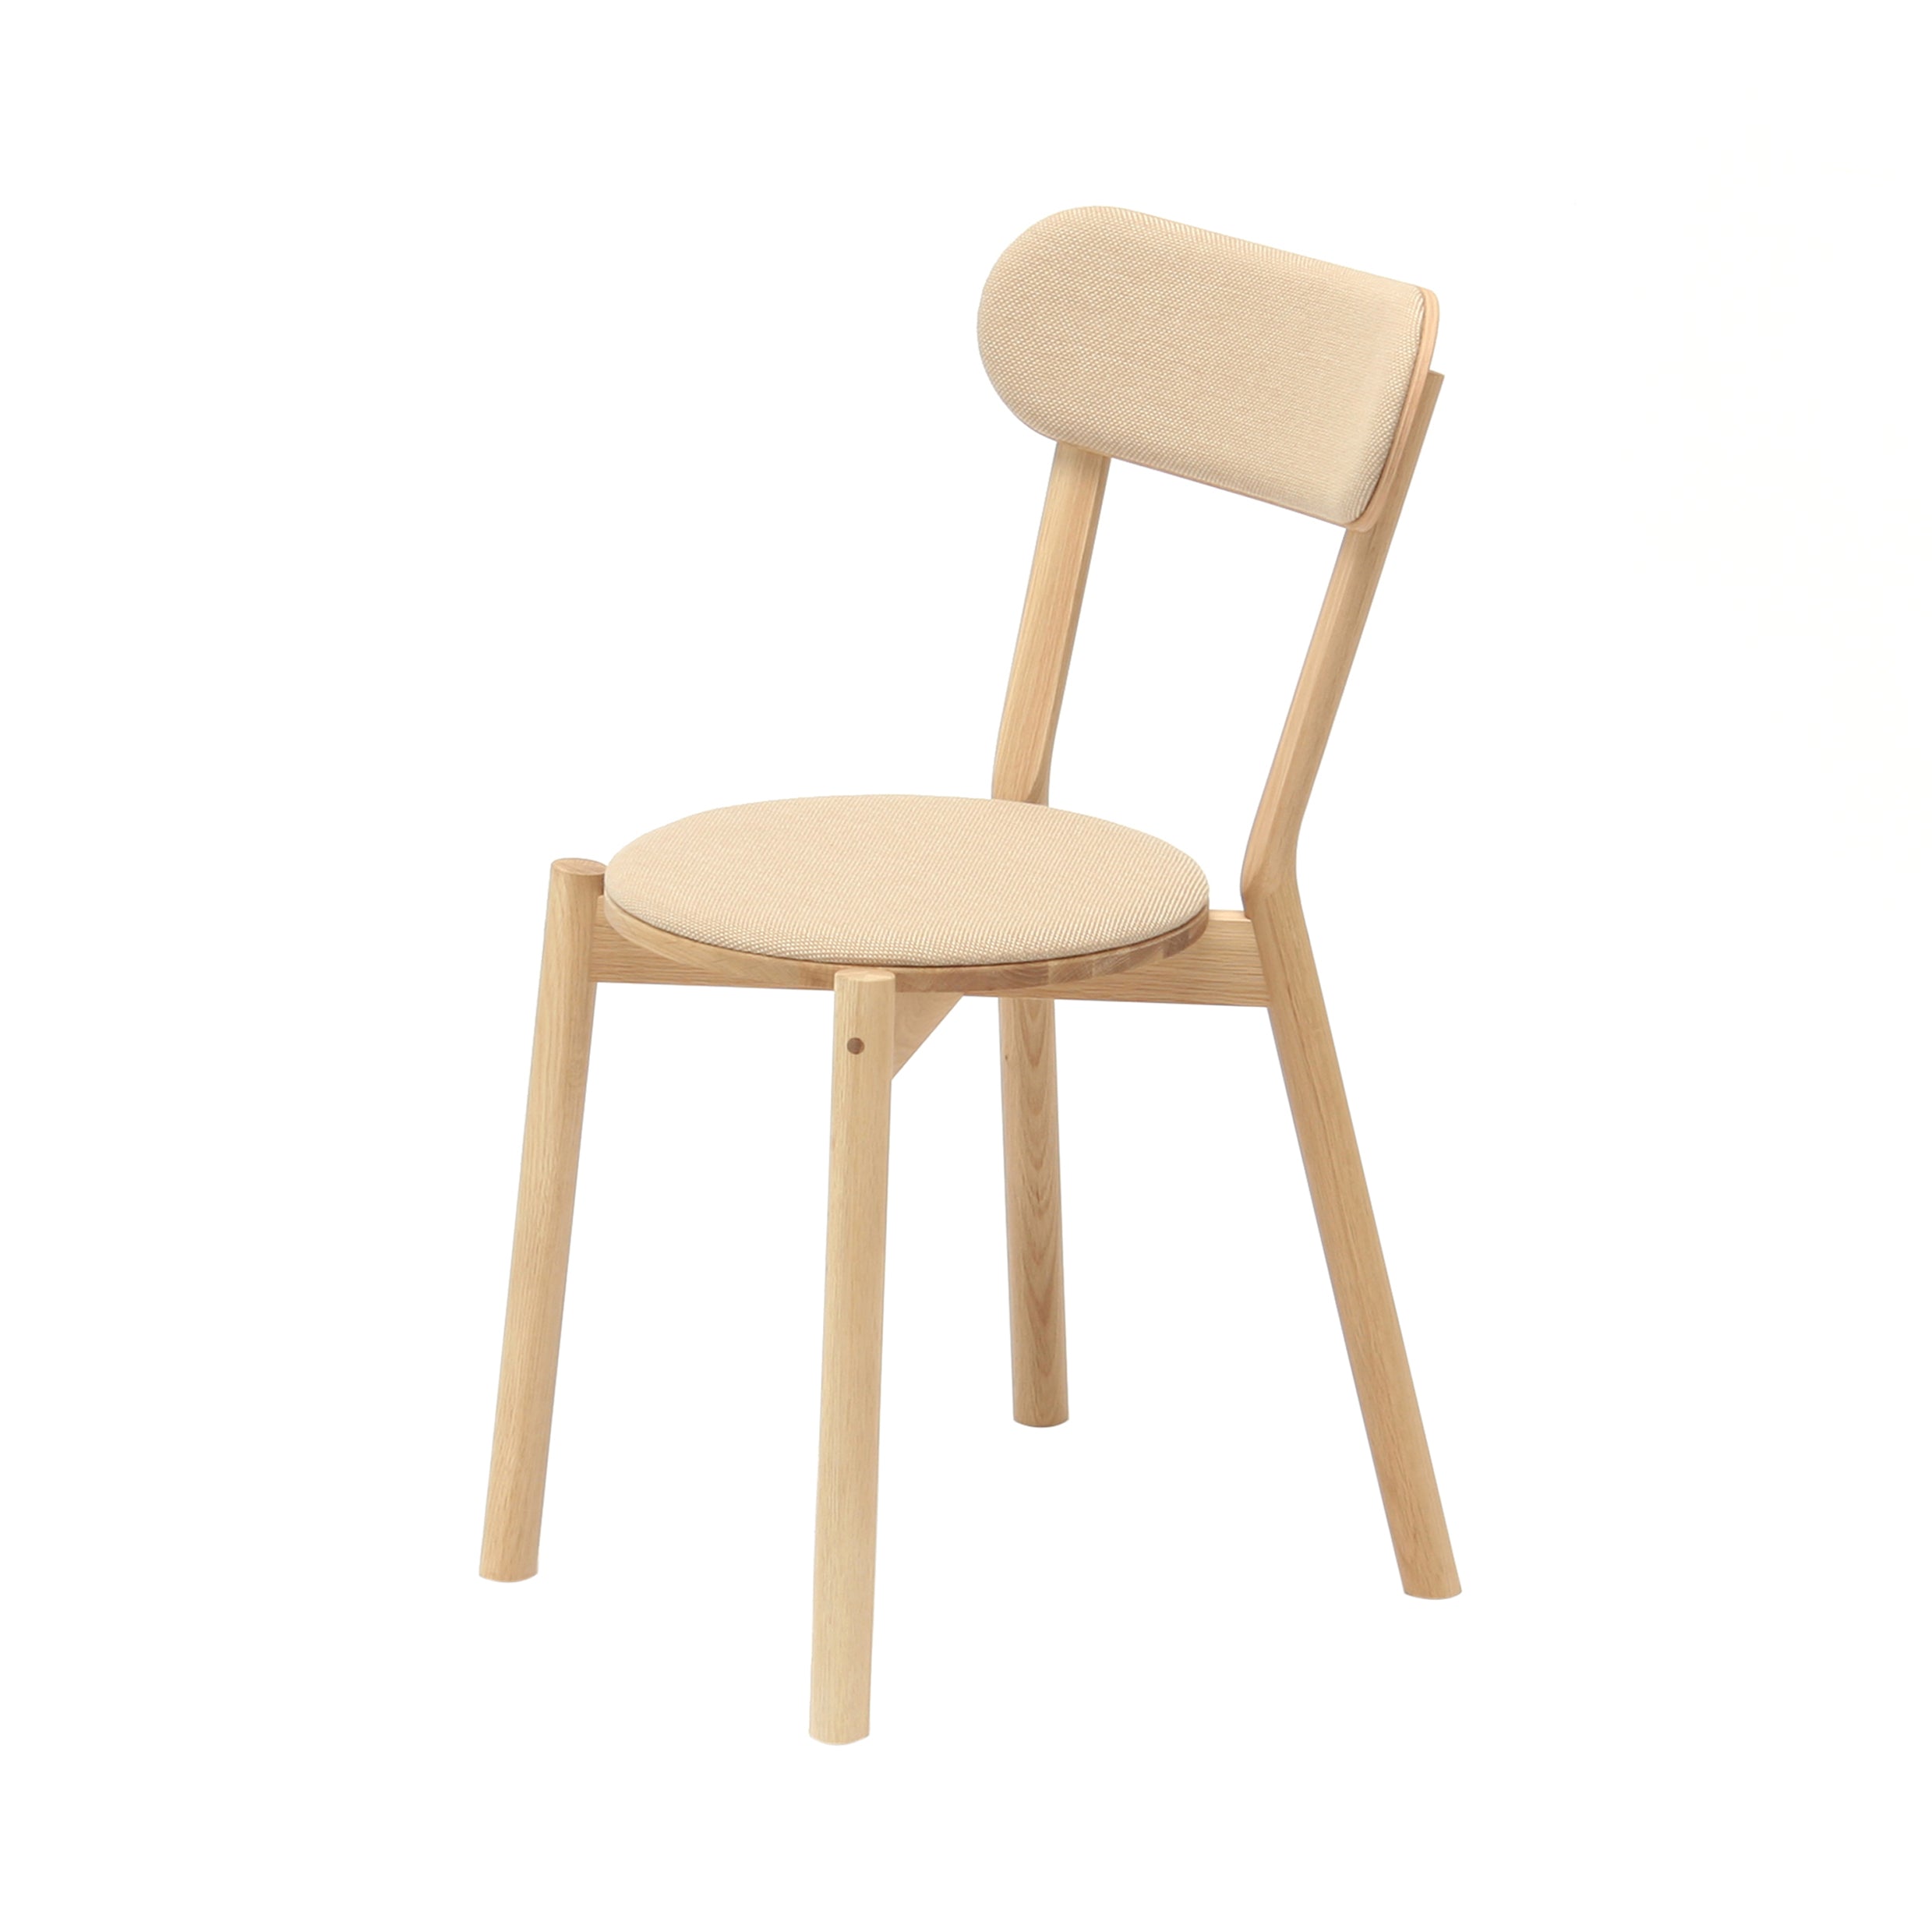 Castor Chair Pad: Pure Oak + Beige Pad